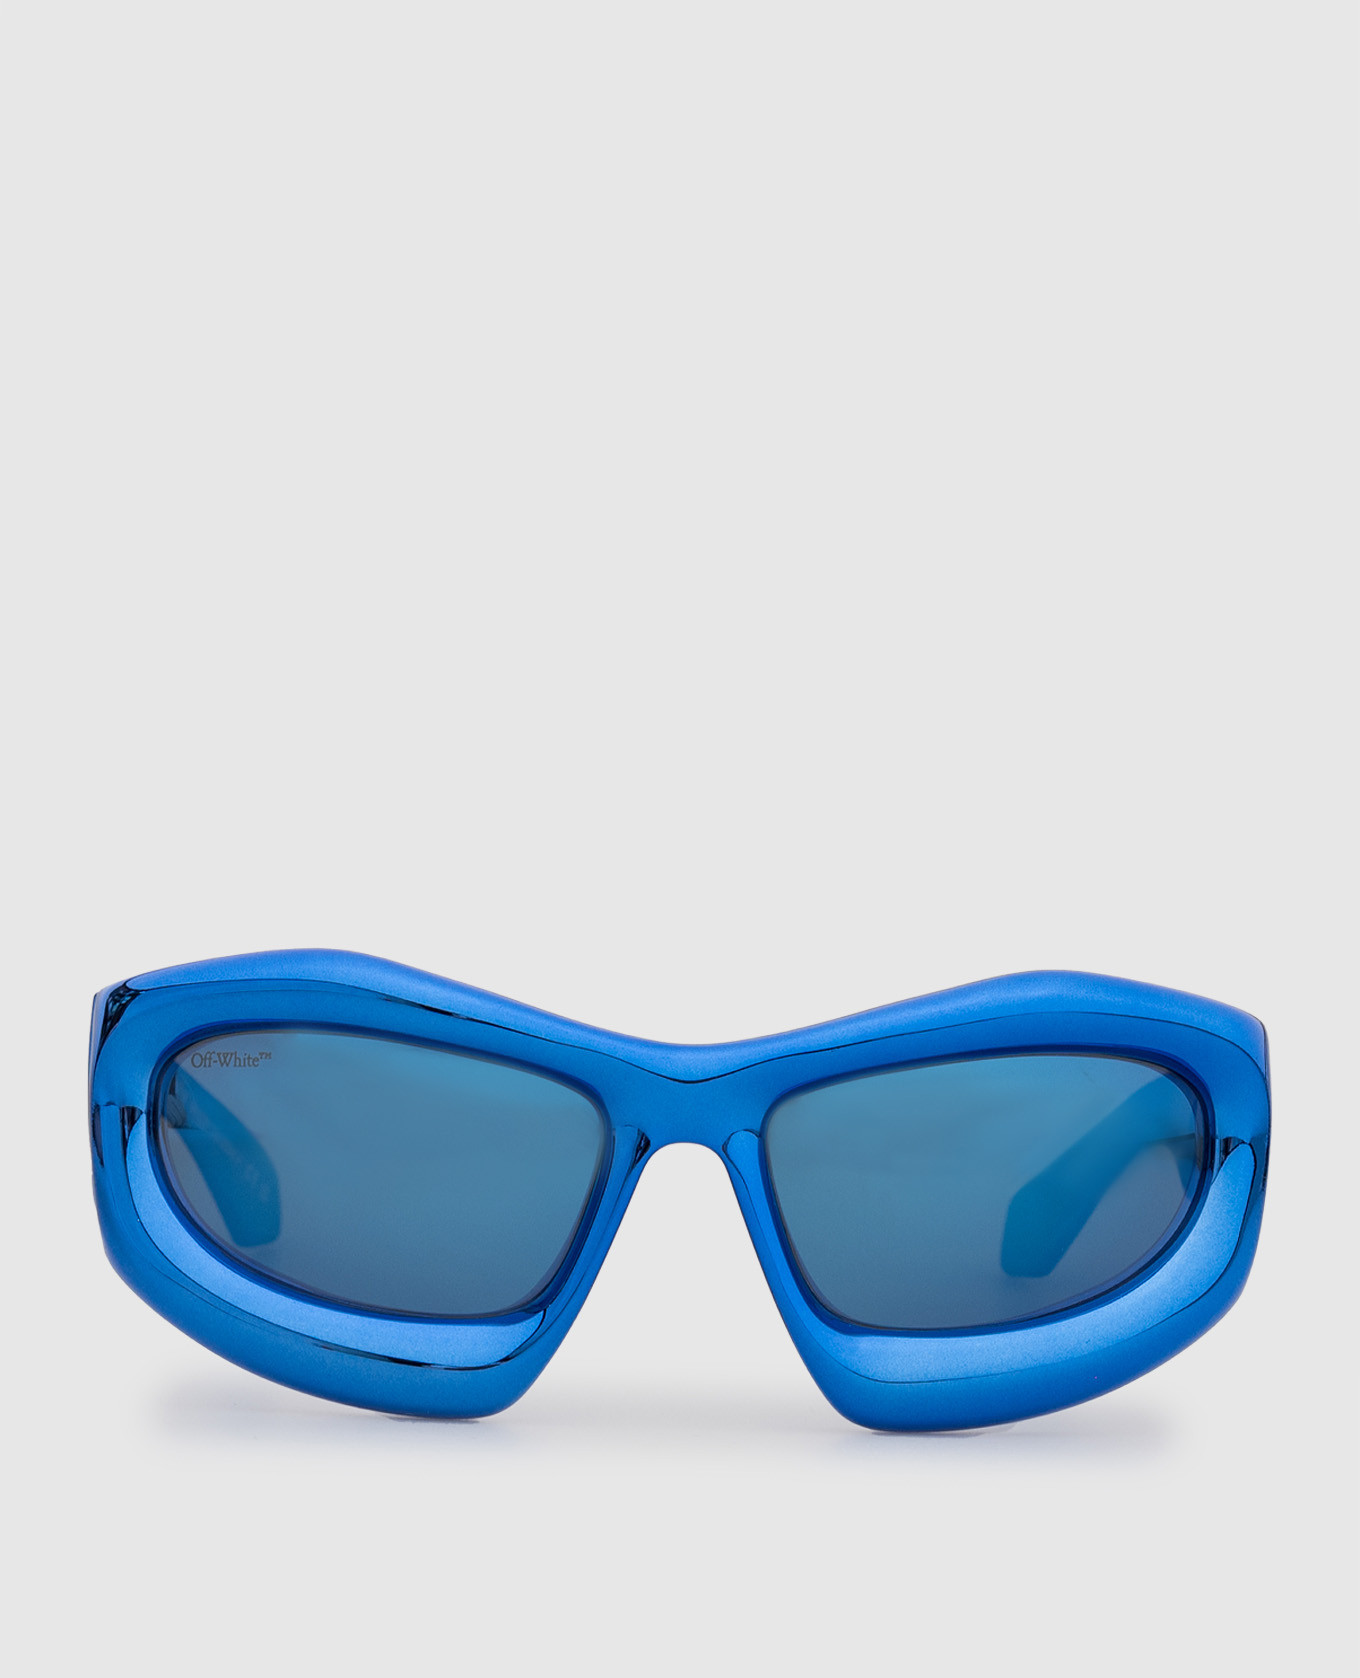 Katoka blue sunglasses with a metallic effect